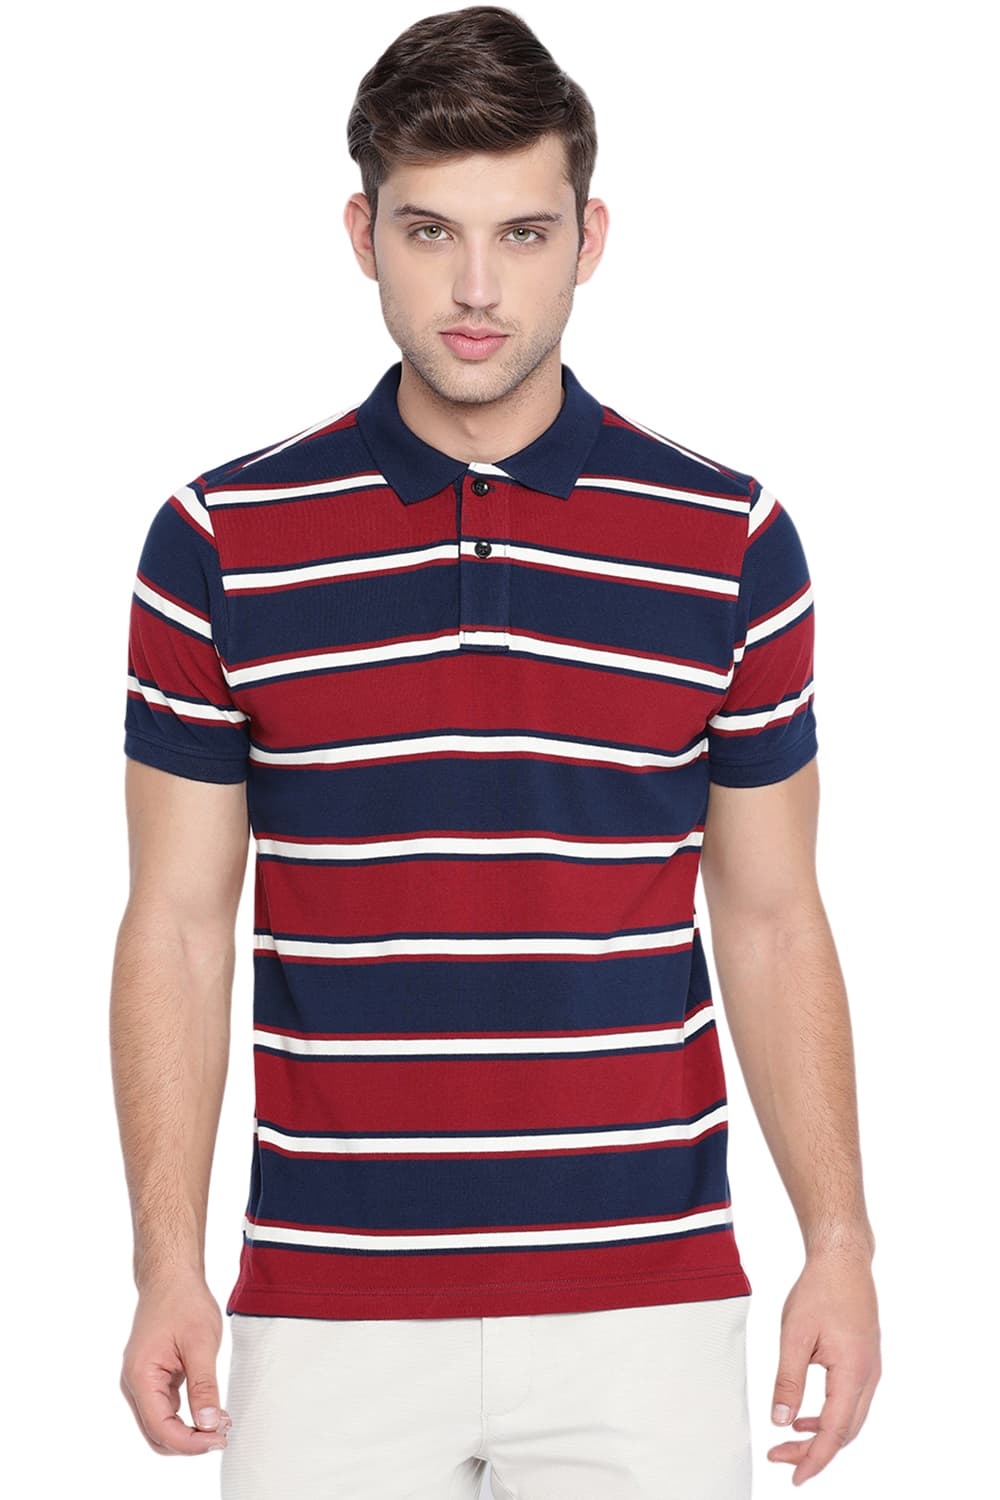 BASICS | Basics Muscle Fit Rhubarb Striped Polo T Shirt